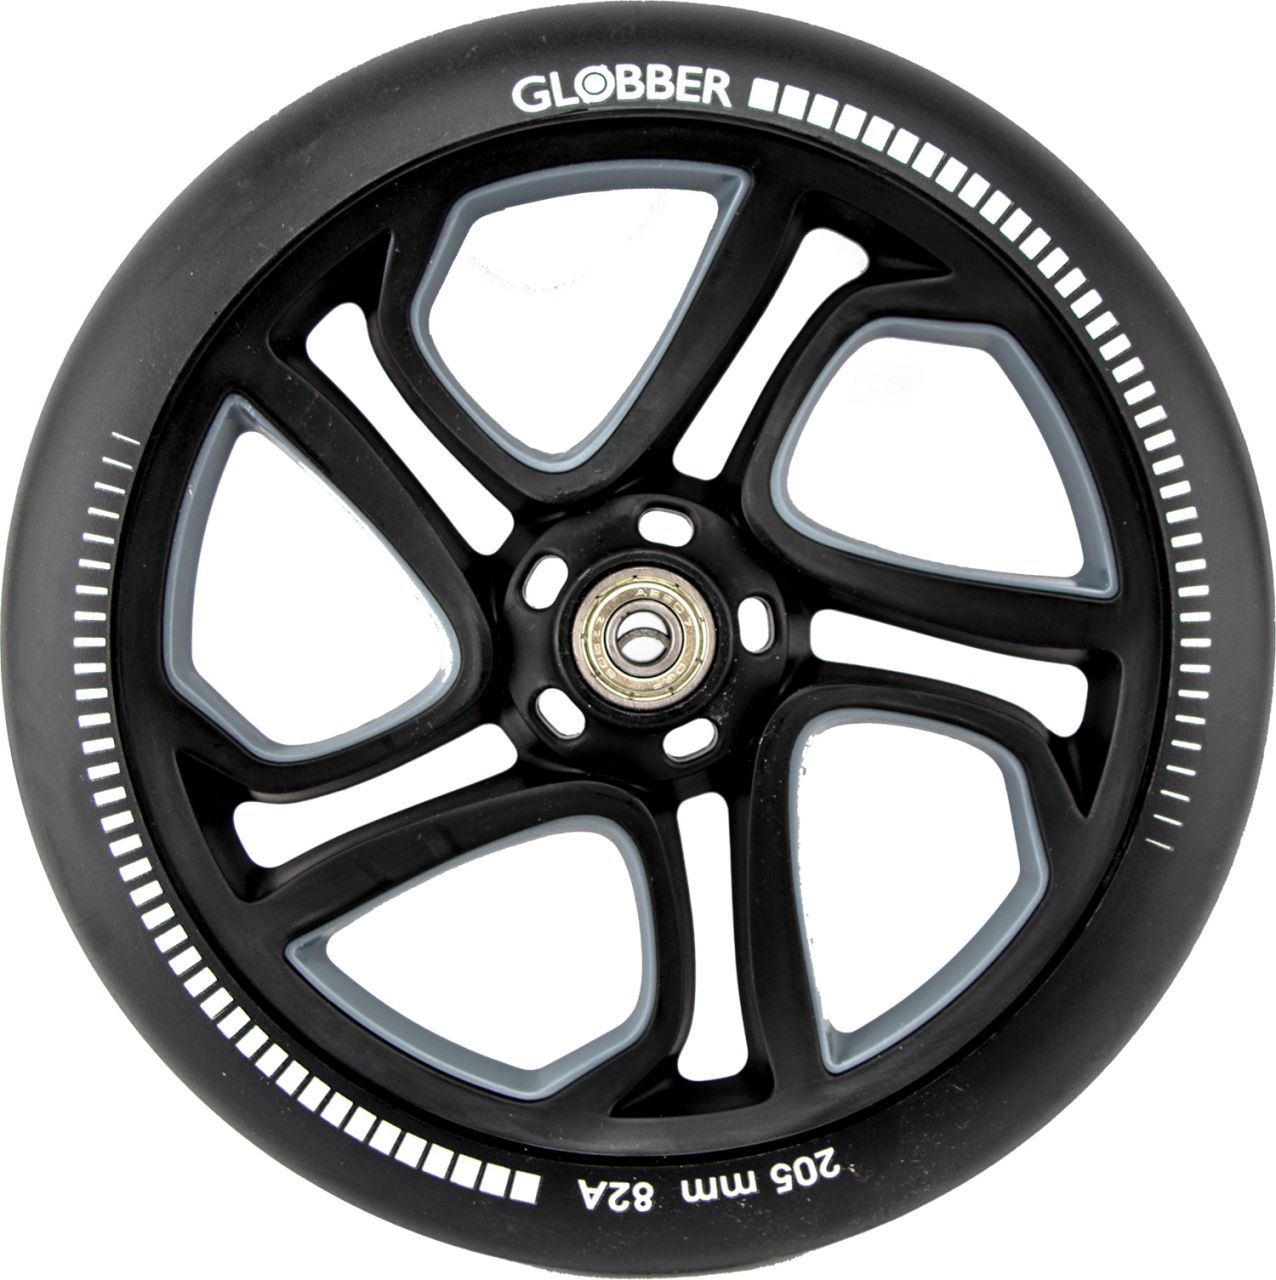 Globber | ONE NL 205 | Wheel | Grau